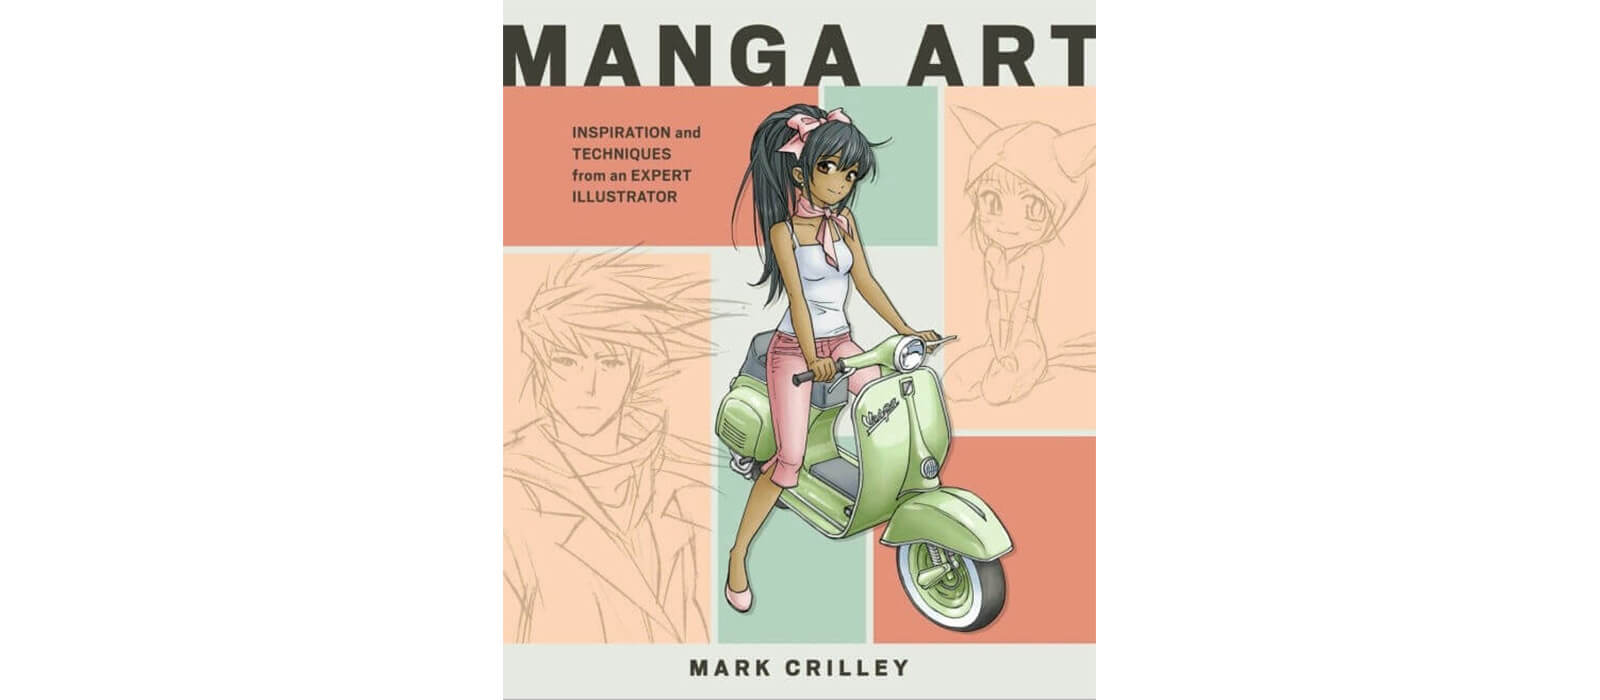 June 2017 Manga Releases - Manga Art